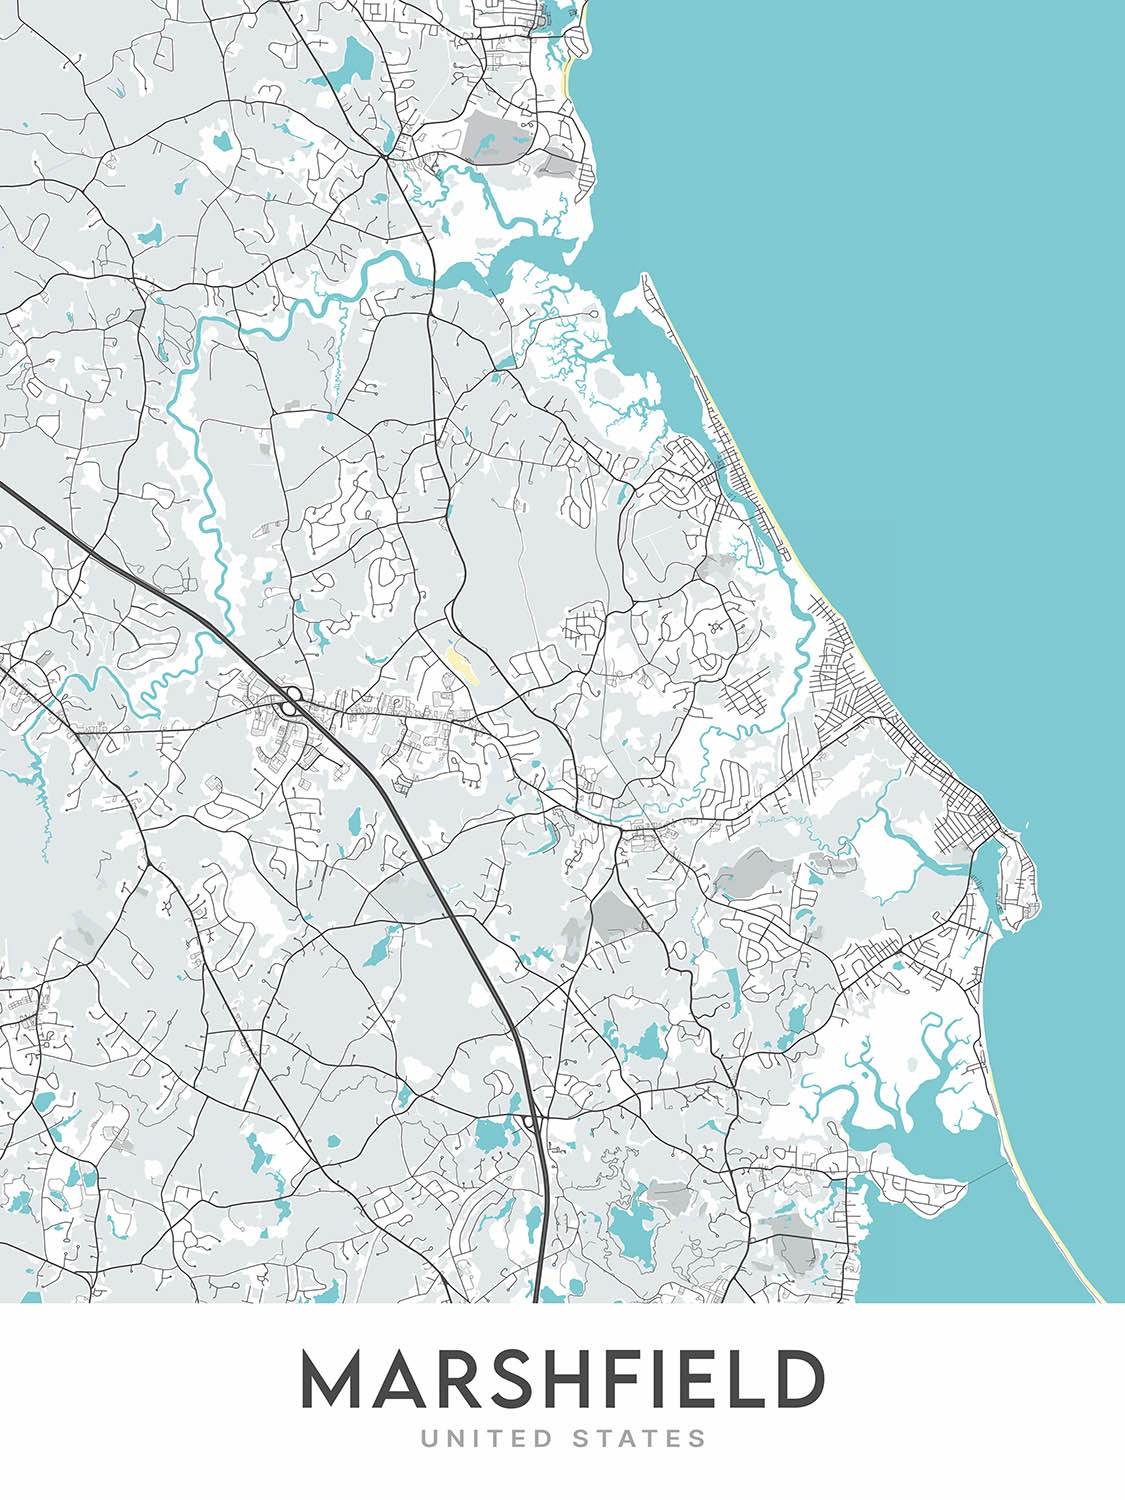 Modern City Map of Marshfield, MA: Brant Rock Beach, Daniel Webster Estate, Green Harbor Beach, Rexhame Beach, South River